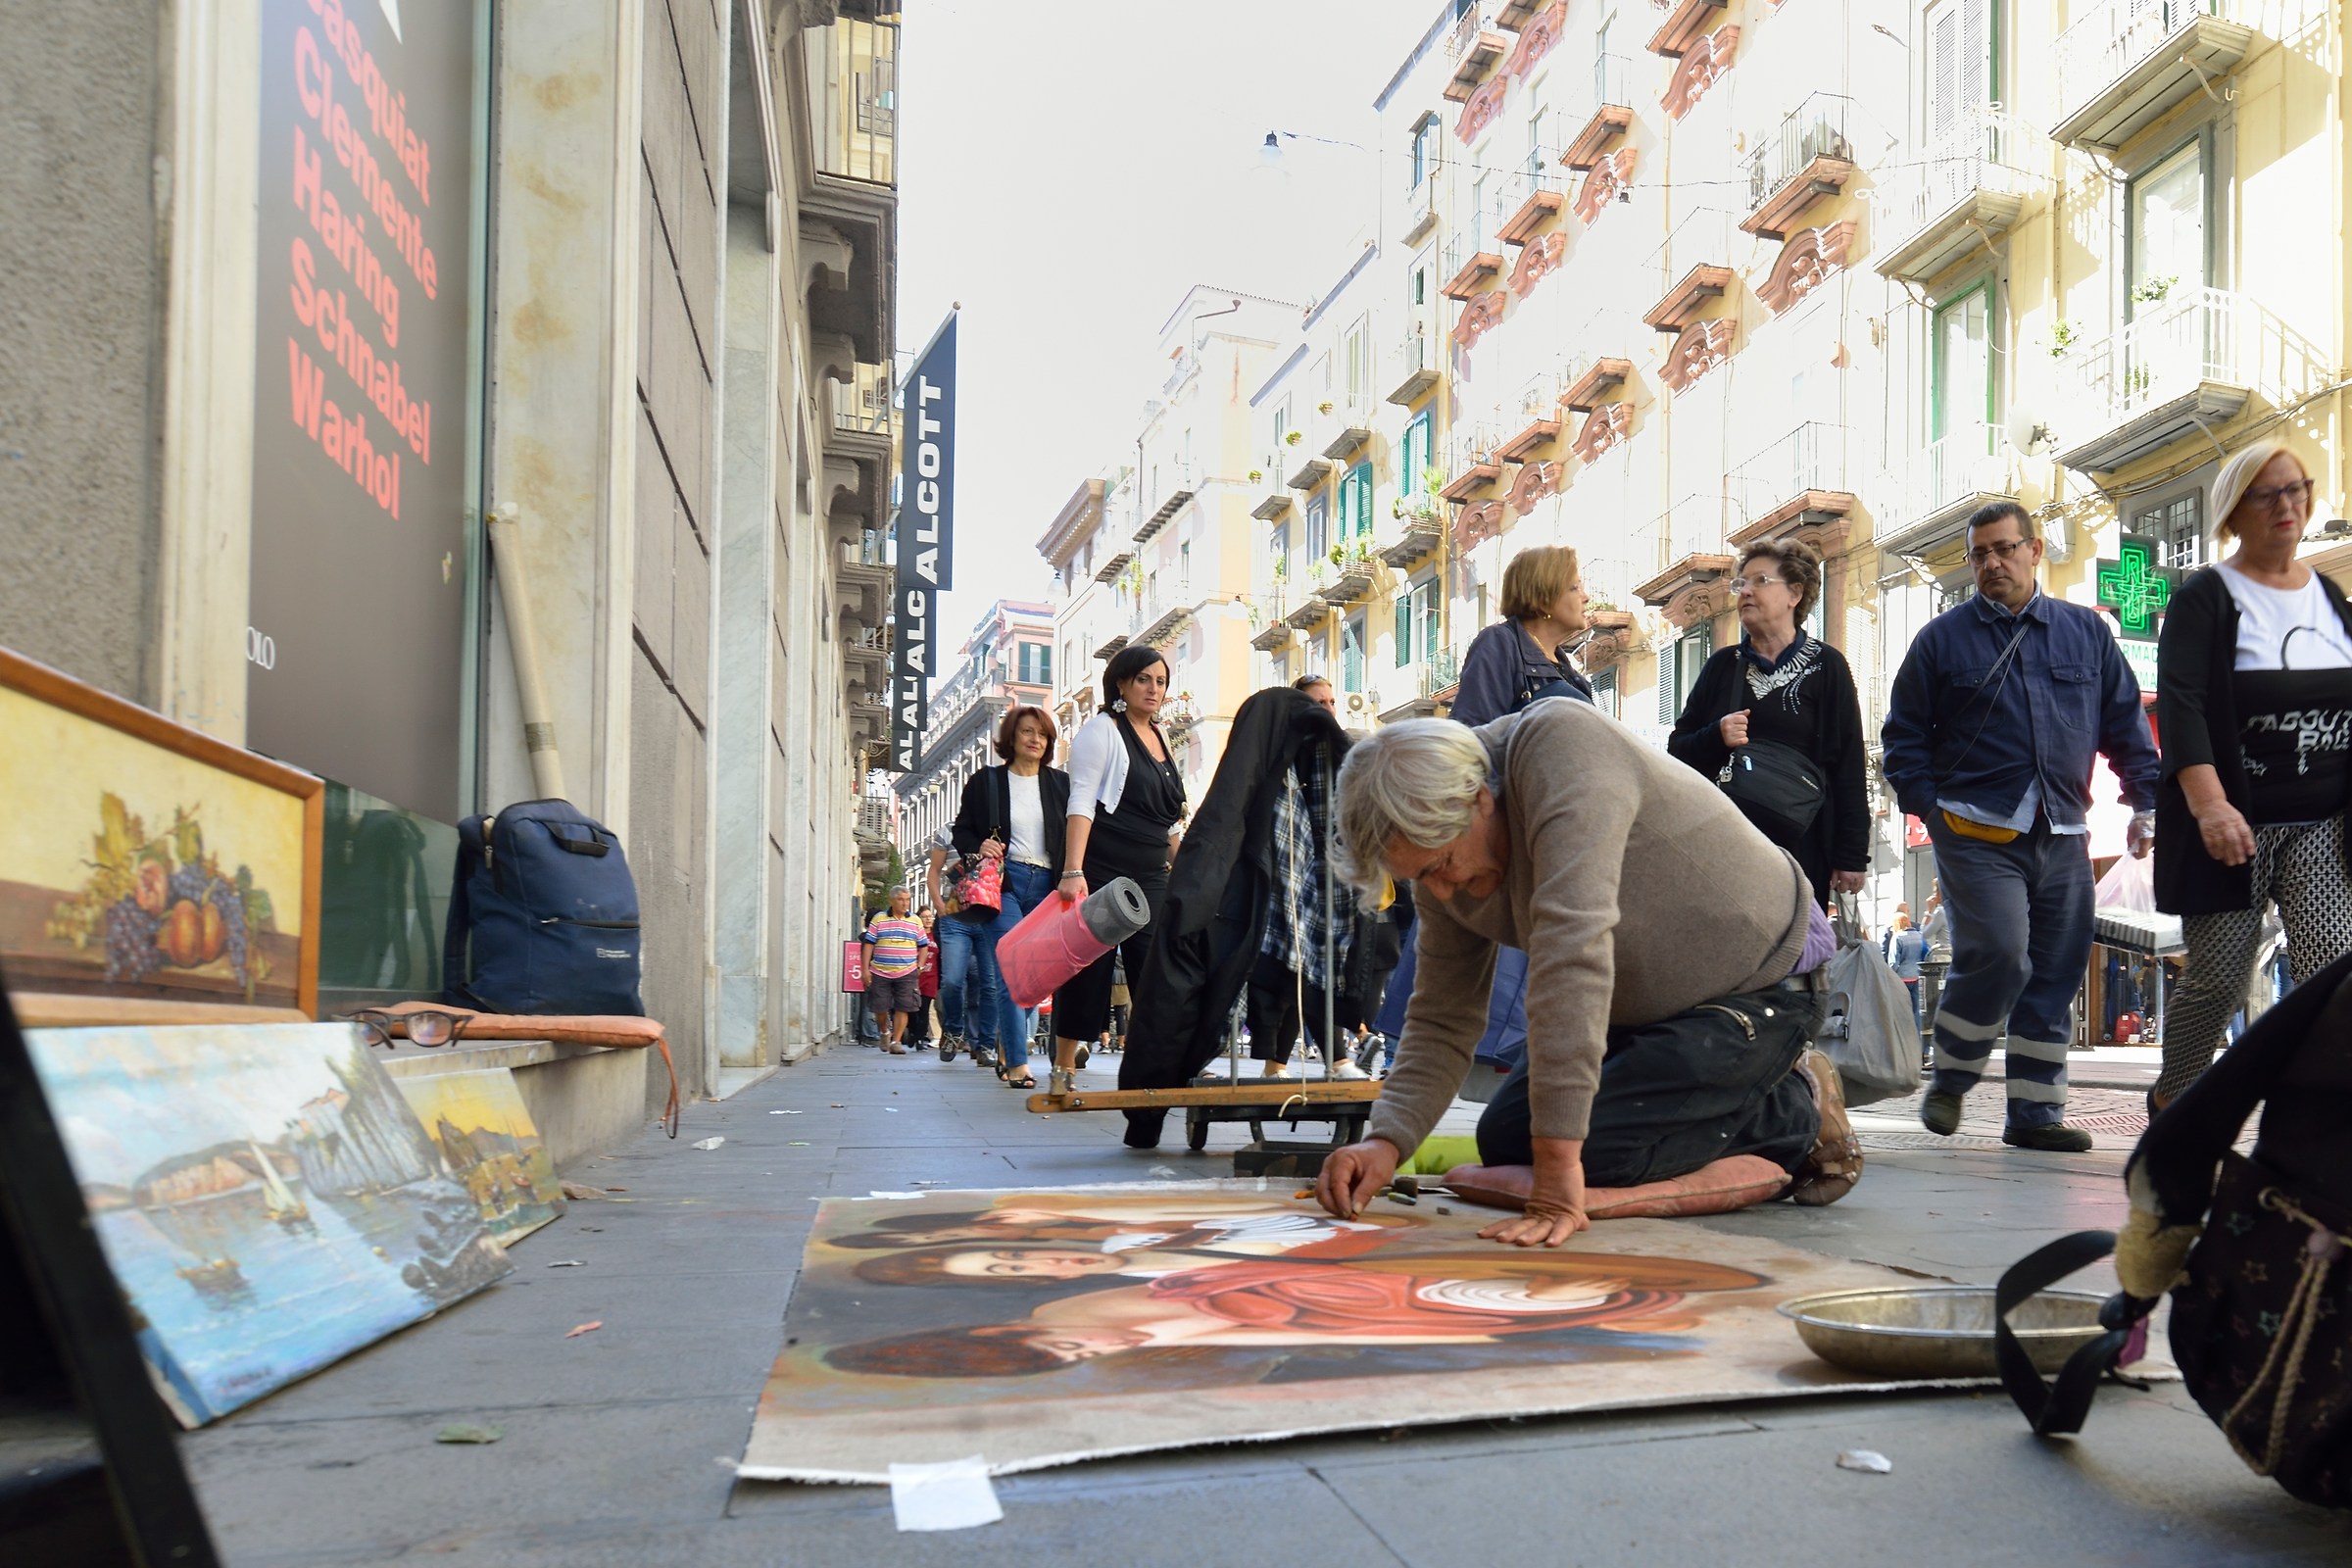 Street artist in Naples ......